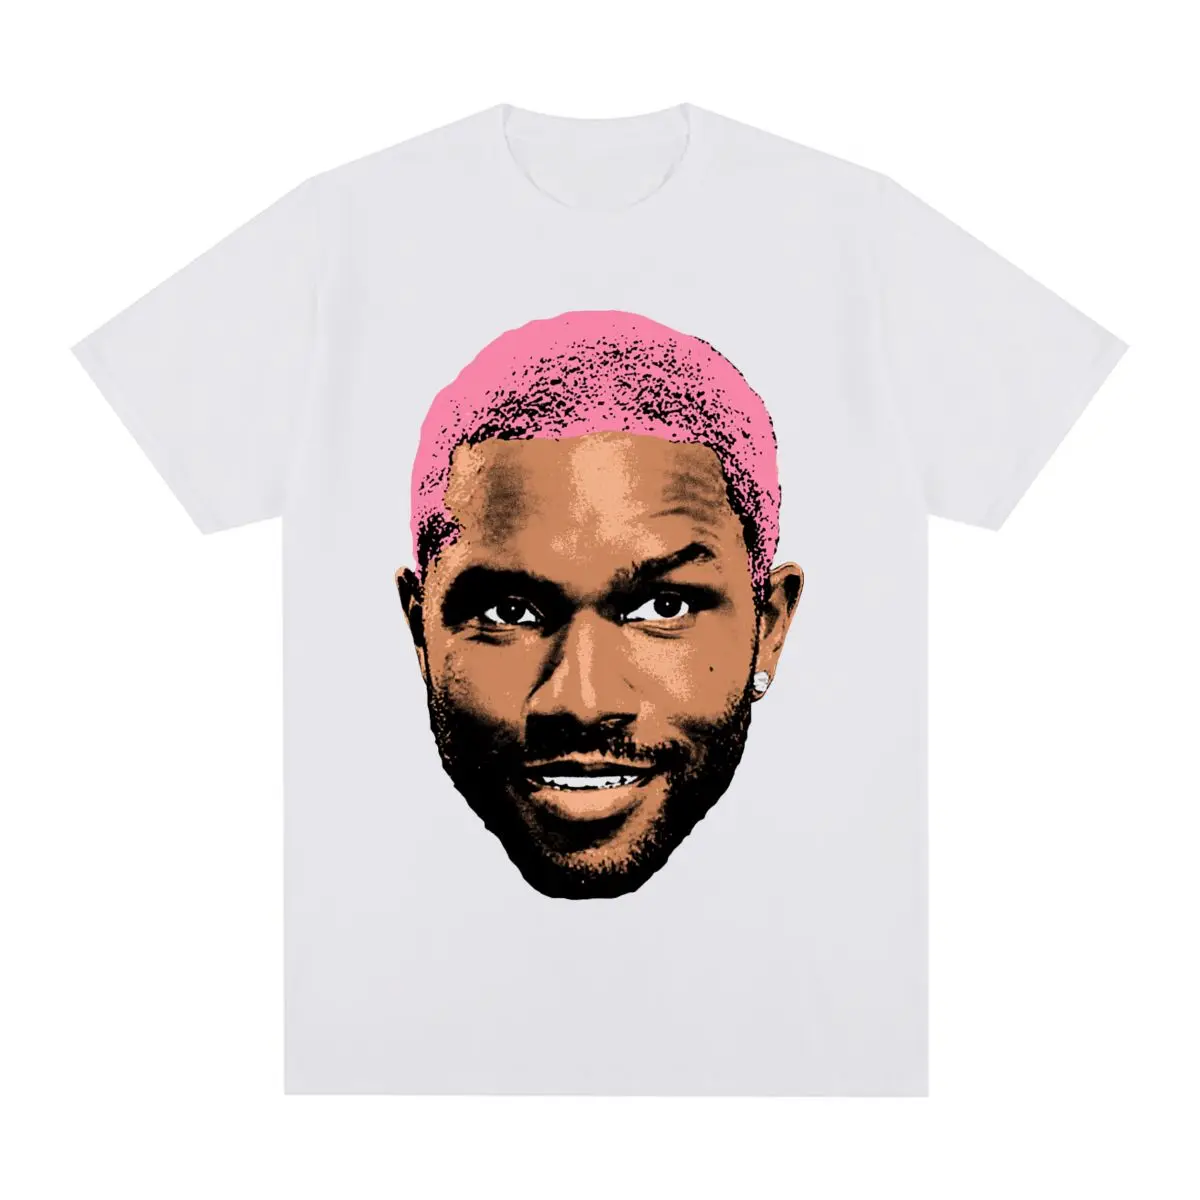 

Frank Vintage T-shirt Blond Hip Hop Pop Music Singer R&B Cotton Men T shirt New Tee Tshirt Womens Tops